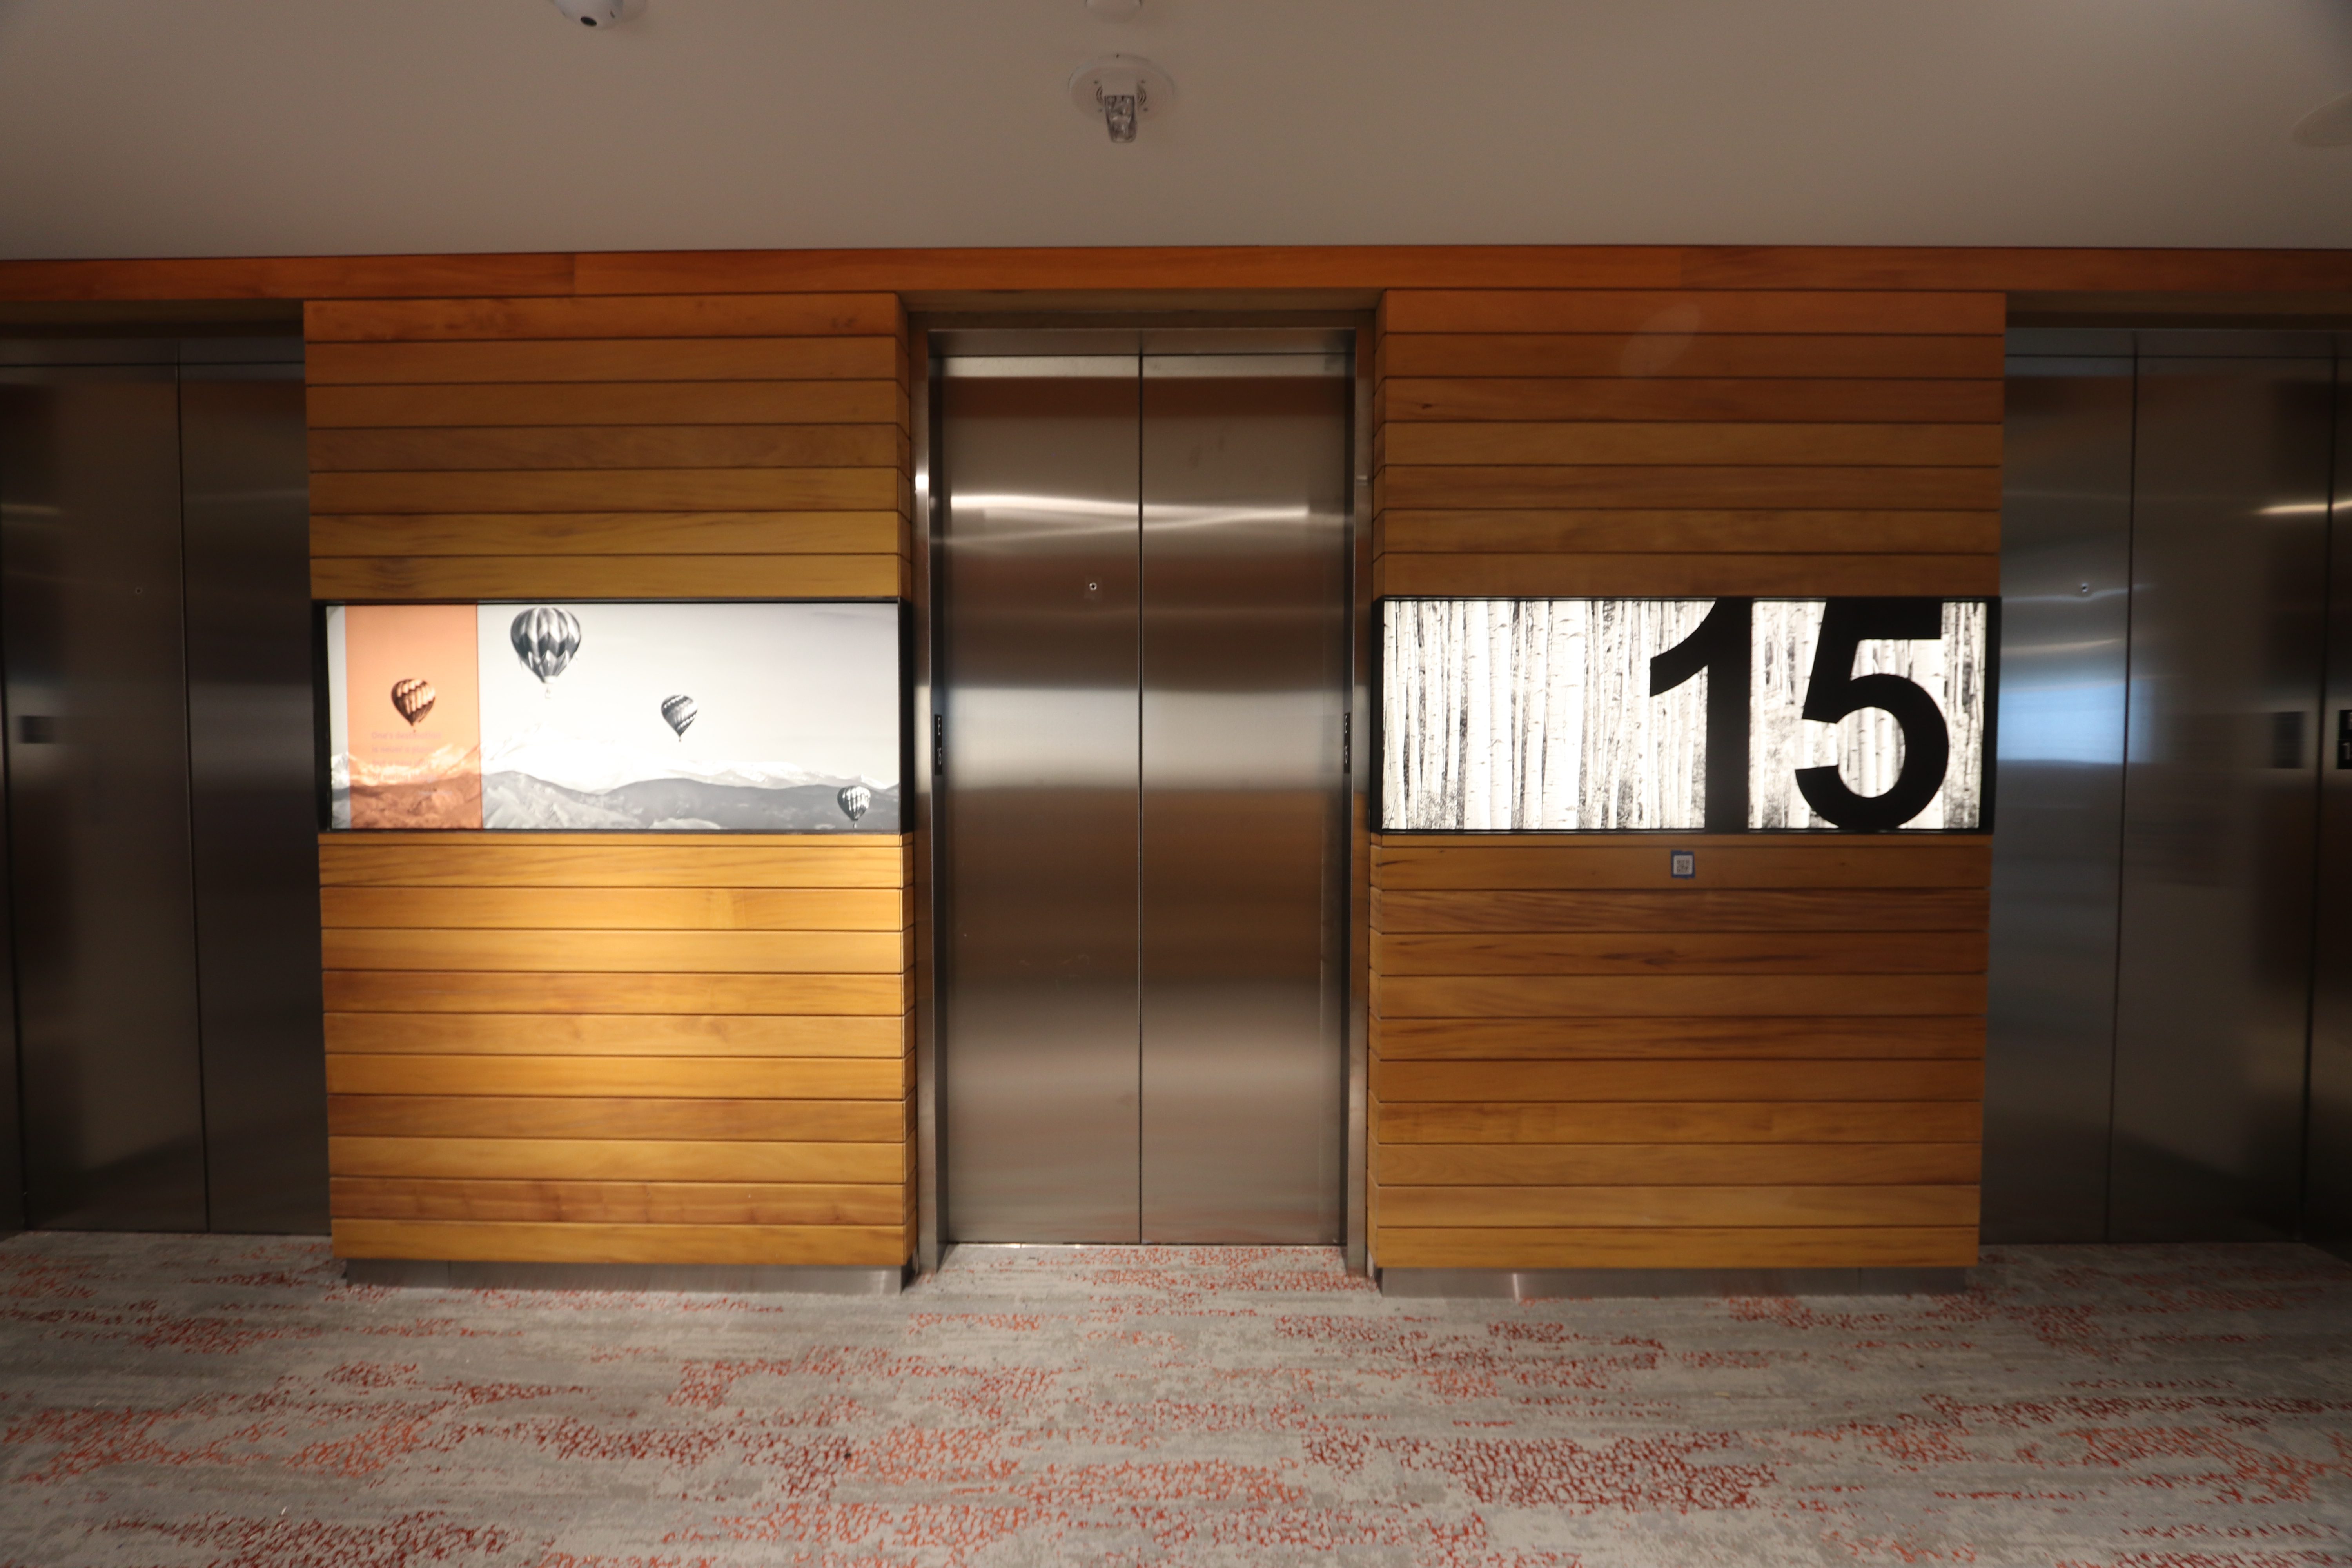 Backlit and translucent acrylic signage in elevator bank.